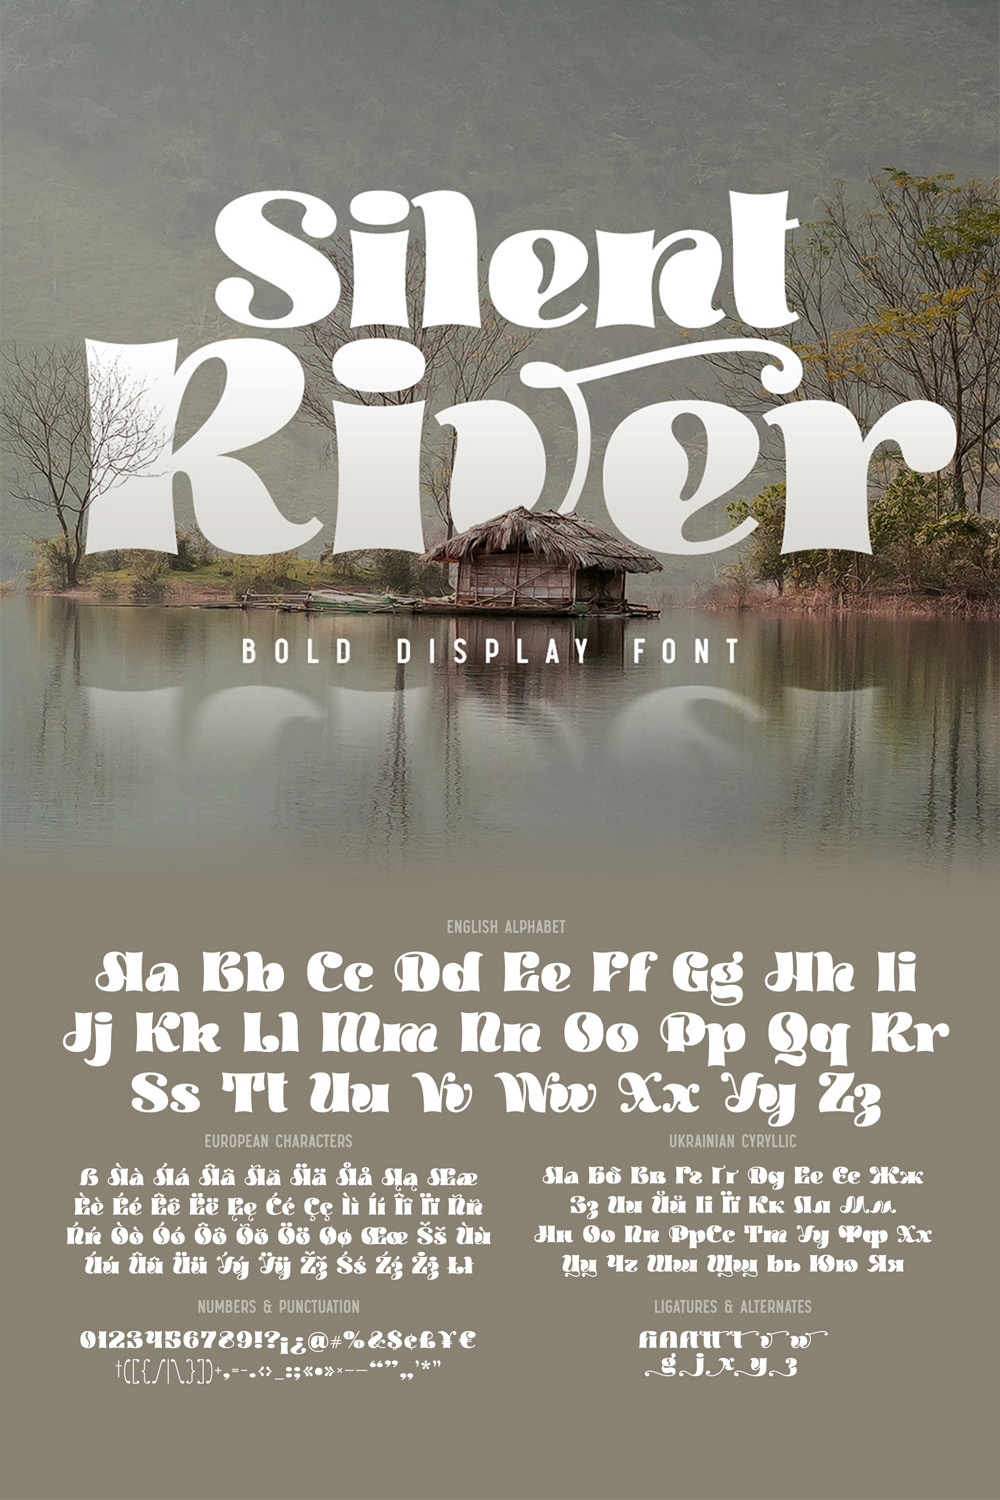 Silent River Display Font pinterest